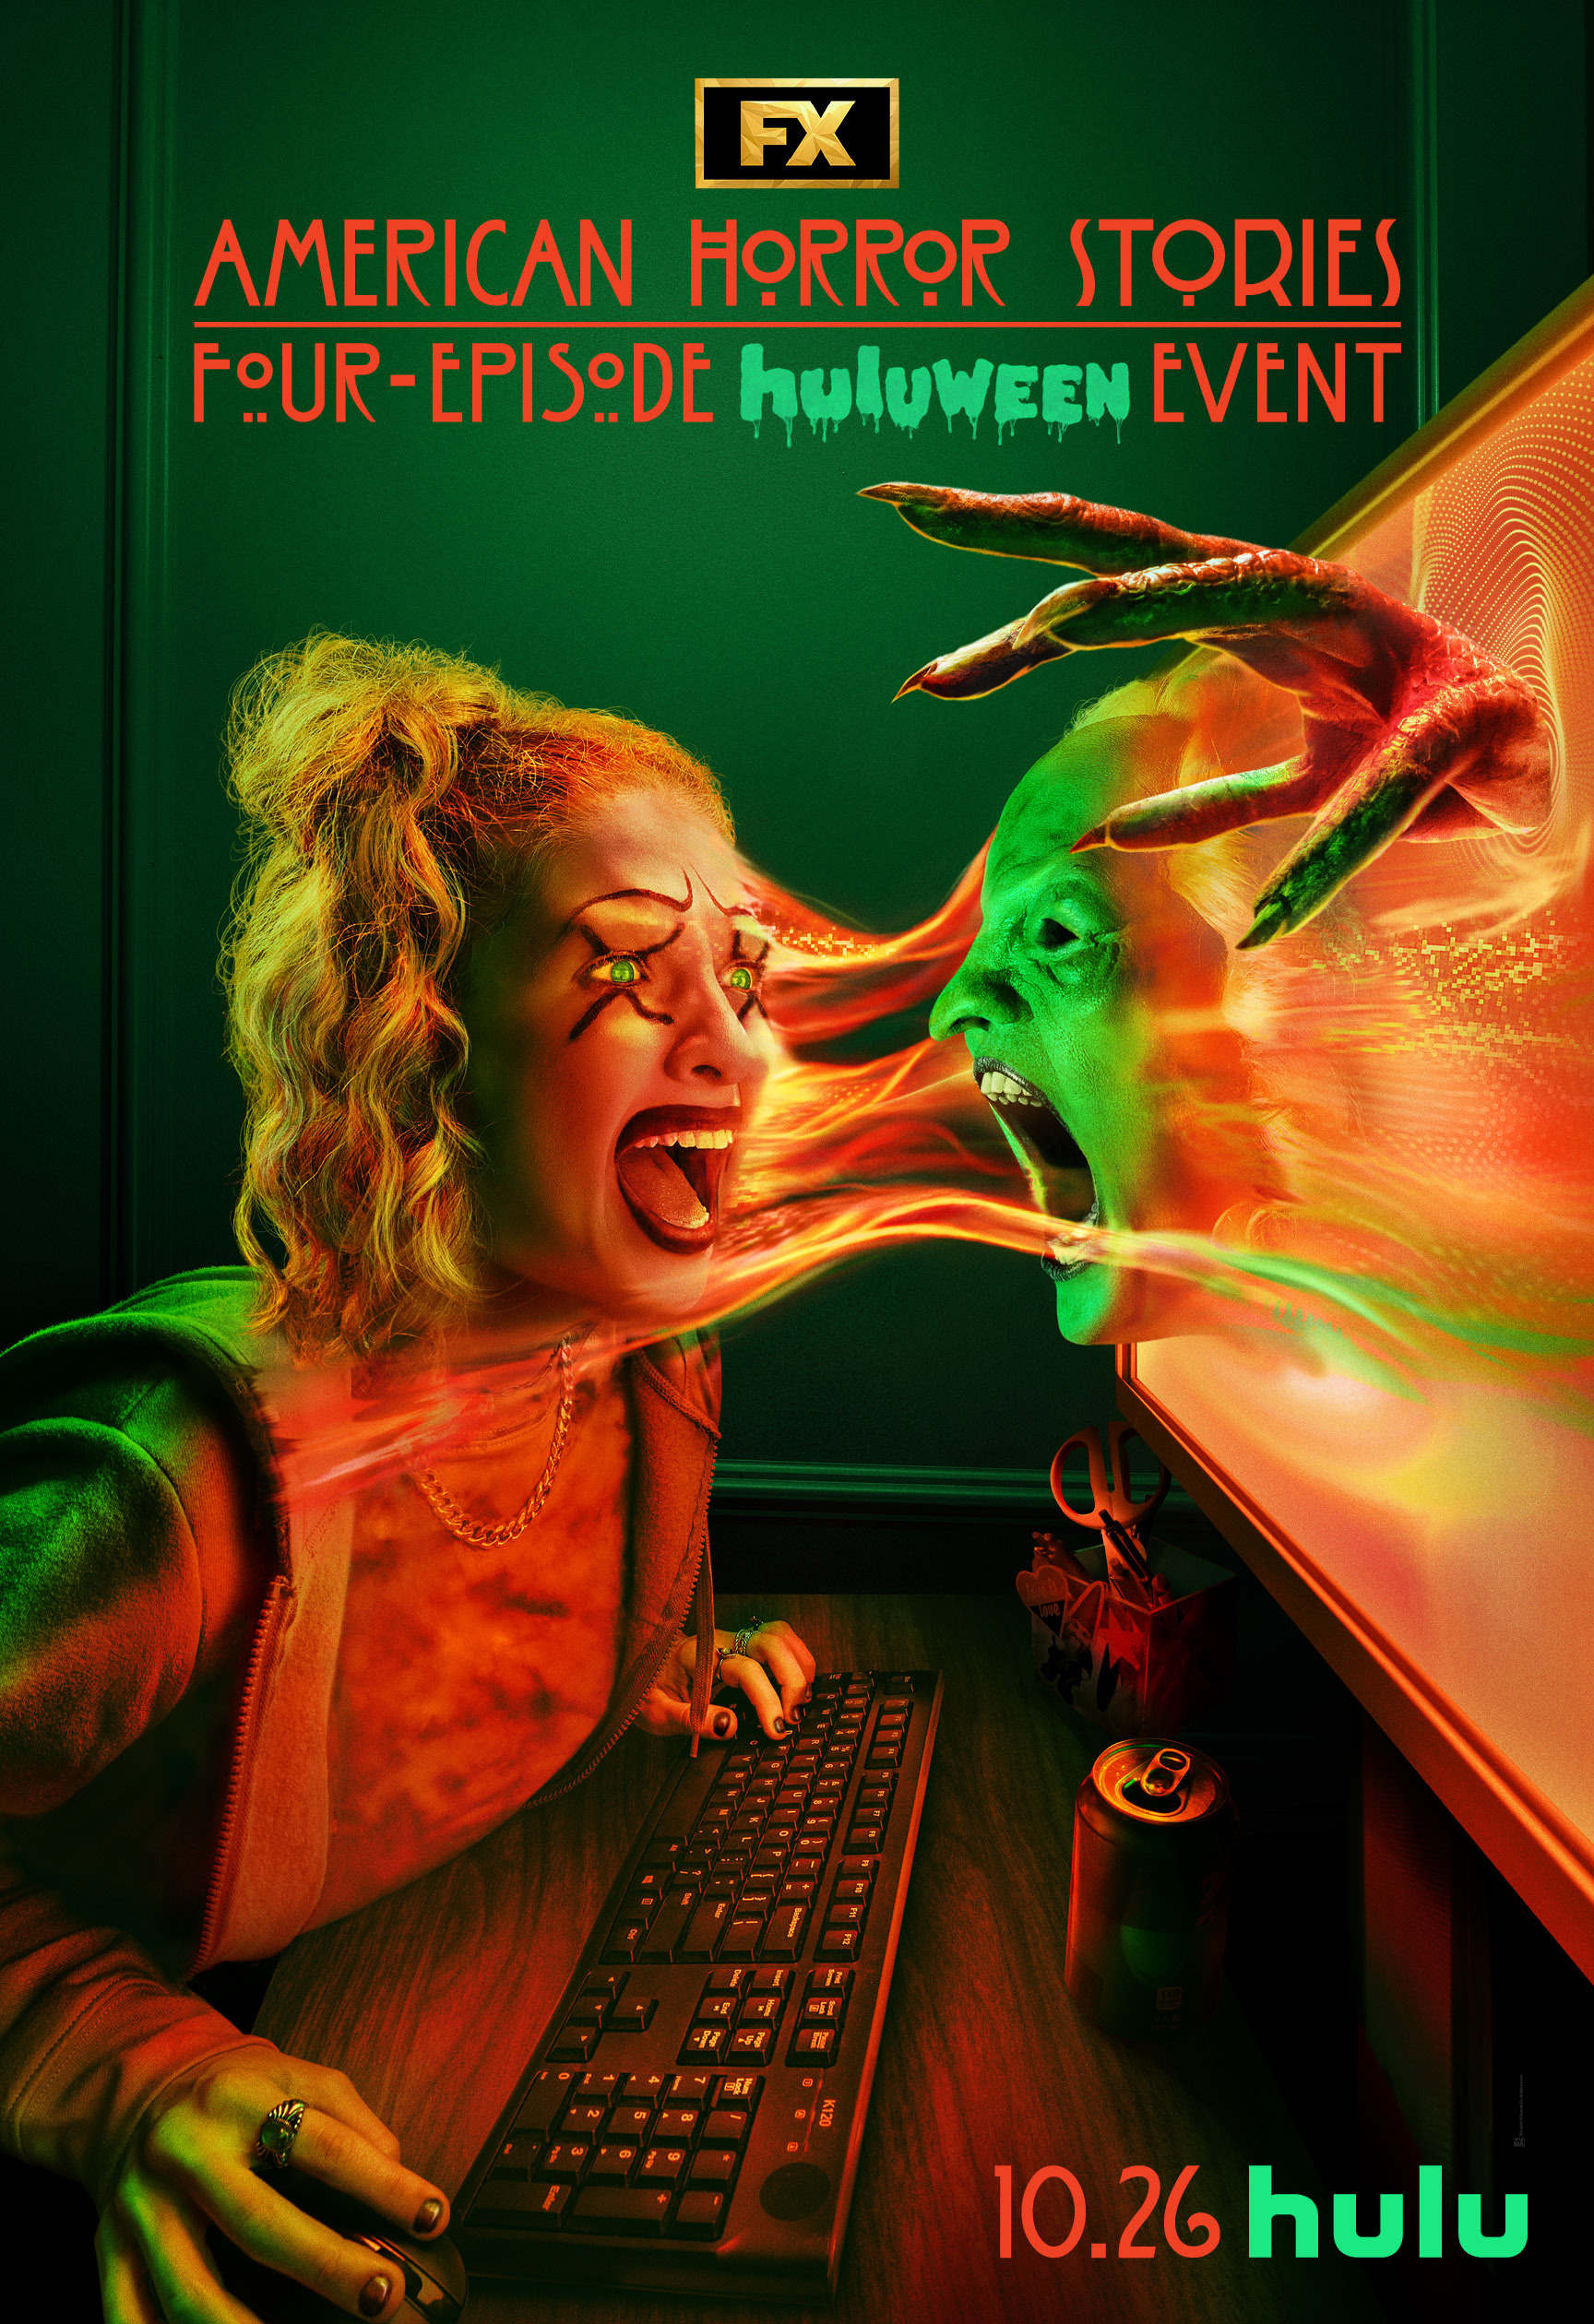 Mega Sized TV Poster Image for American Horror Stories (#19 of 24)